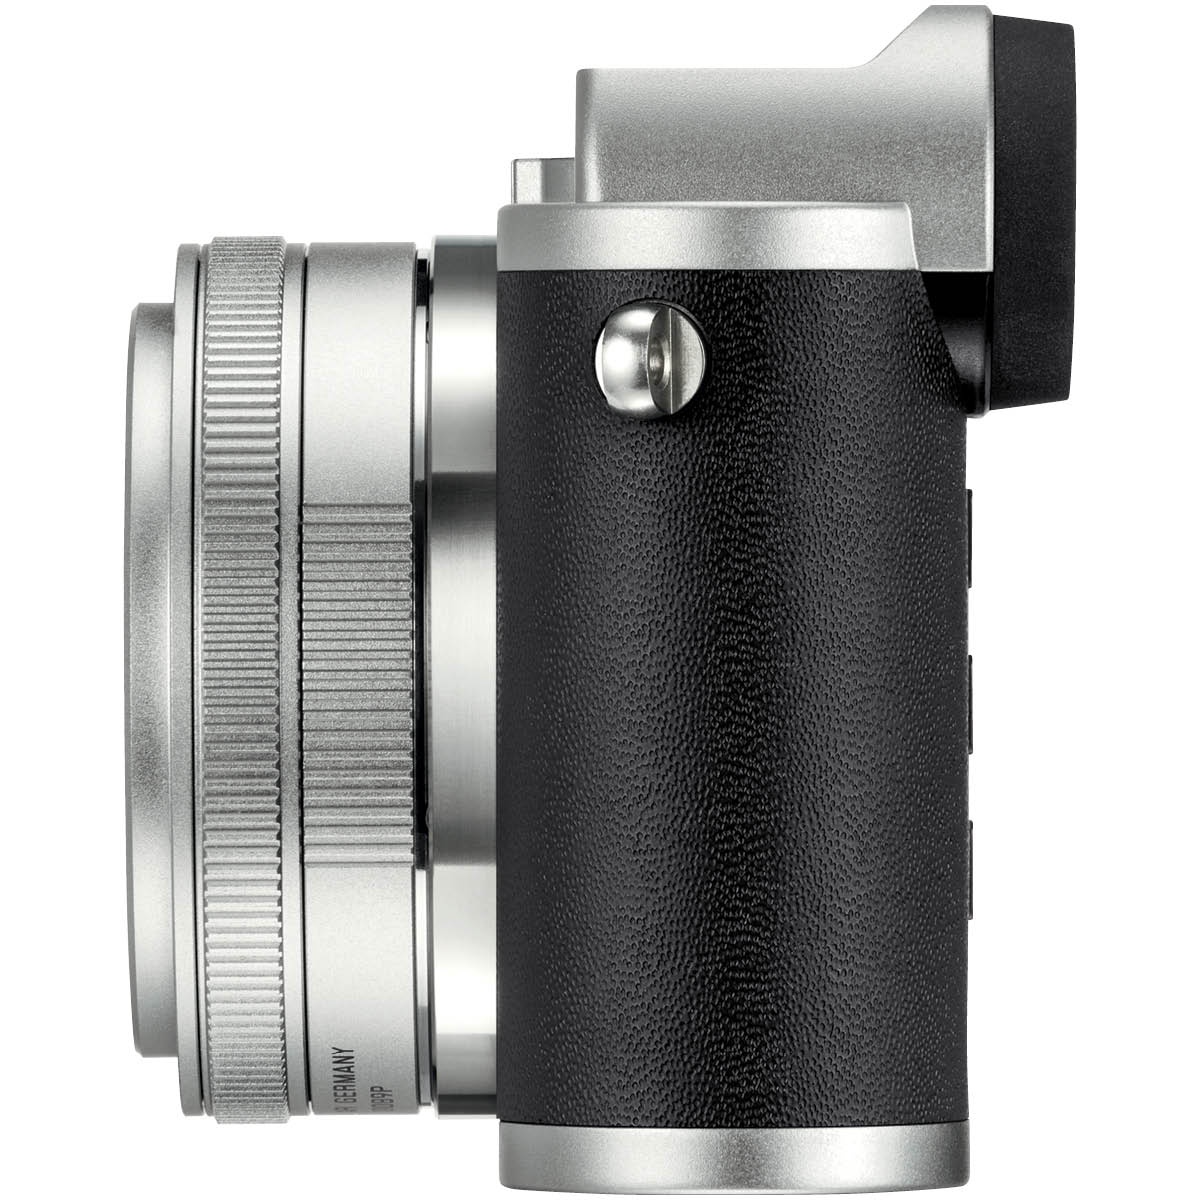 Leica CL Prime Kit mit 18 mm 1:2,8 Silber